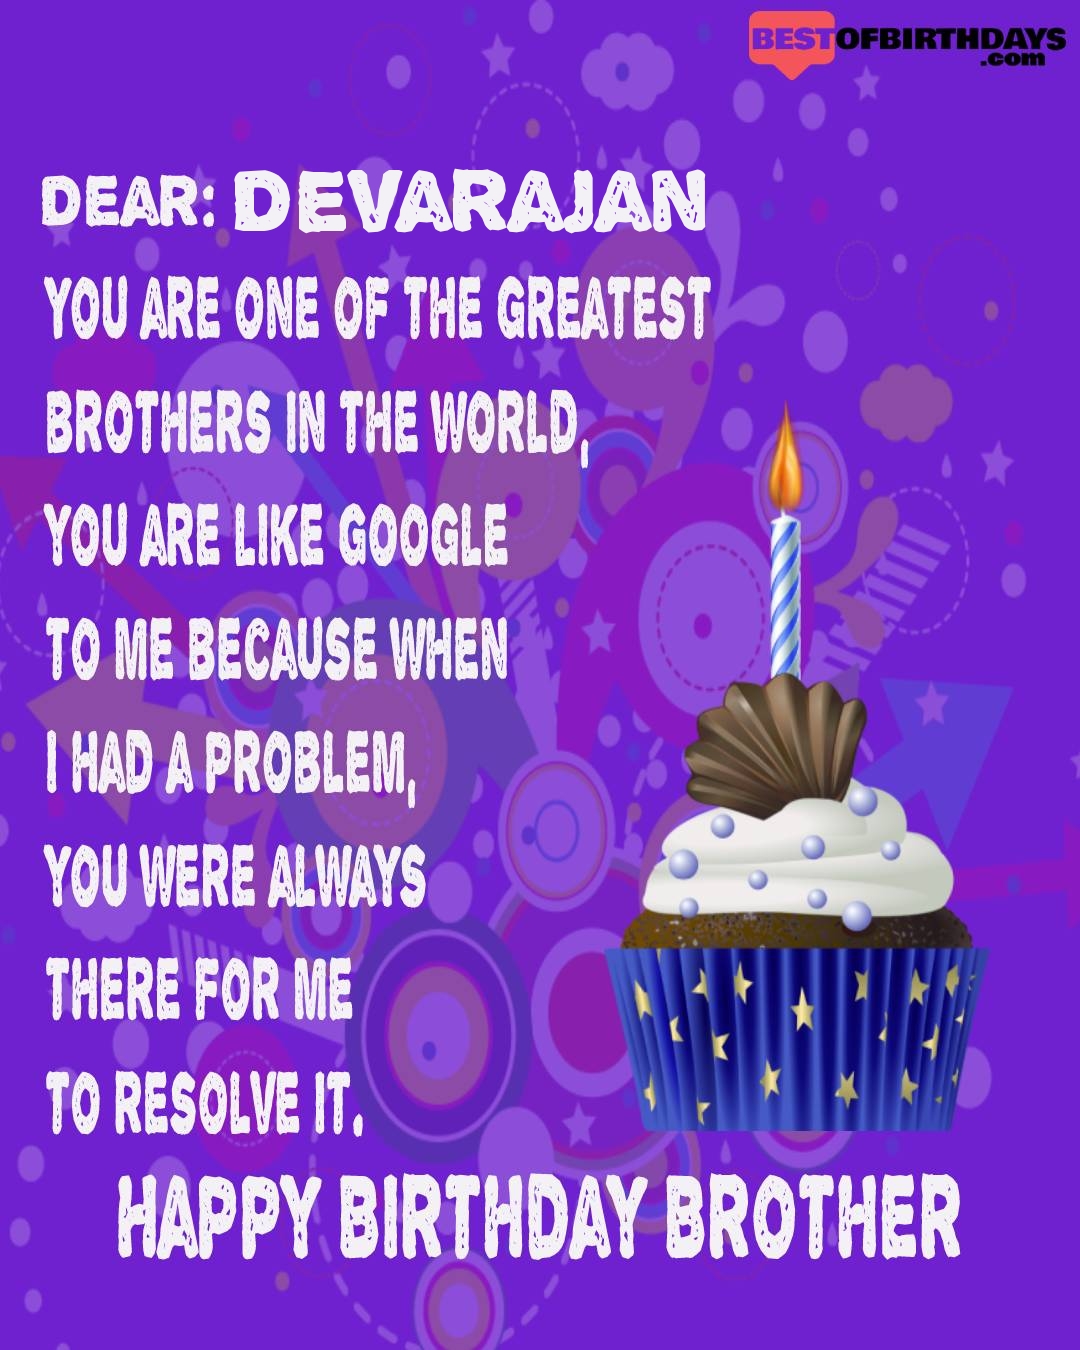 Happy birthday devarajan bhai brother bro